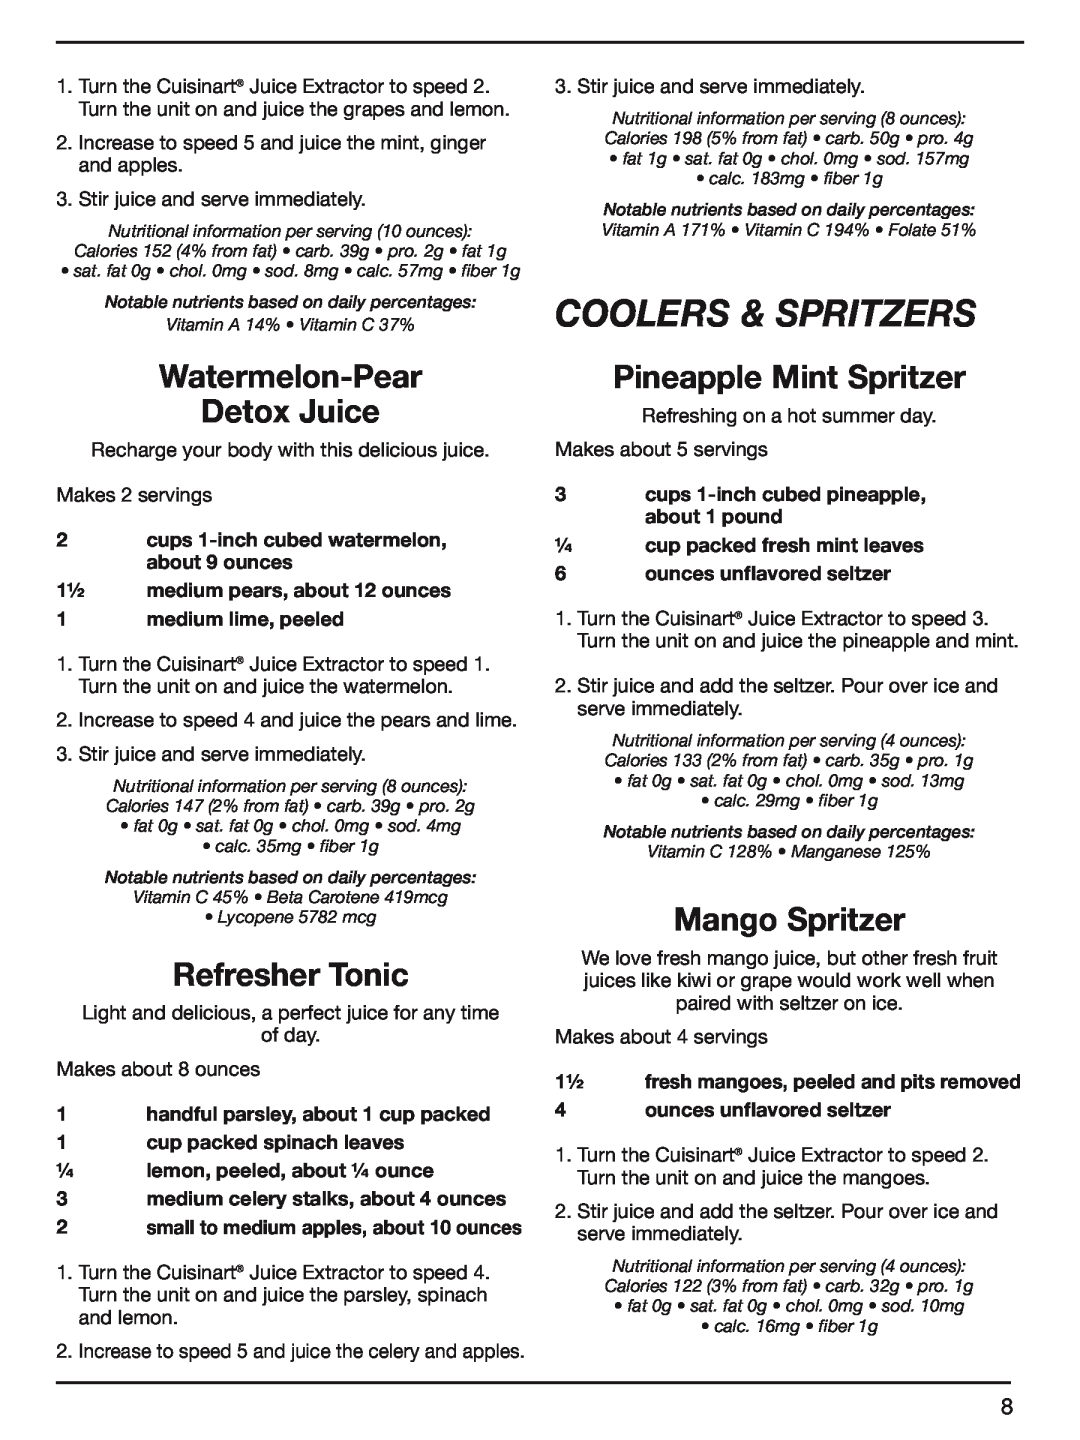 Cuisinart CJE-1000 manual coolers & spritzers, Watermelon-Pear Detox Juice, Refresher Tonic, Pineapple Mint Spritzer 